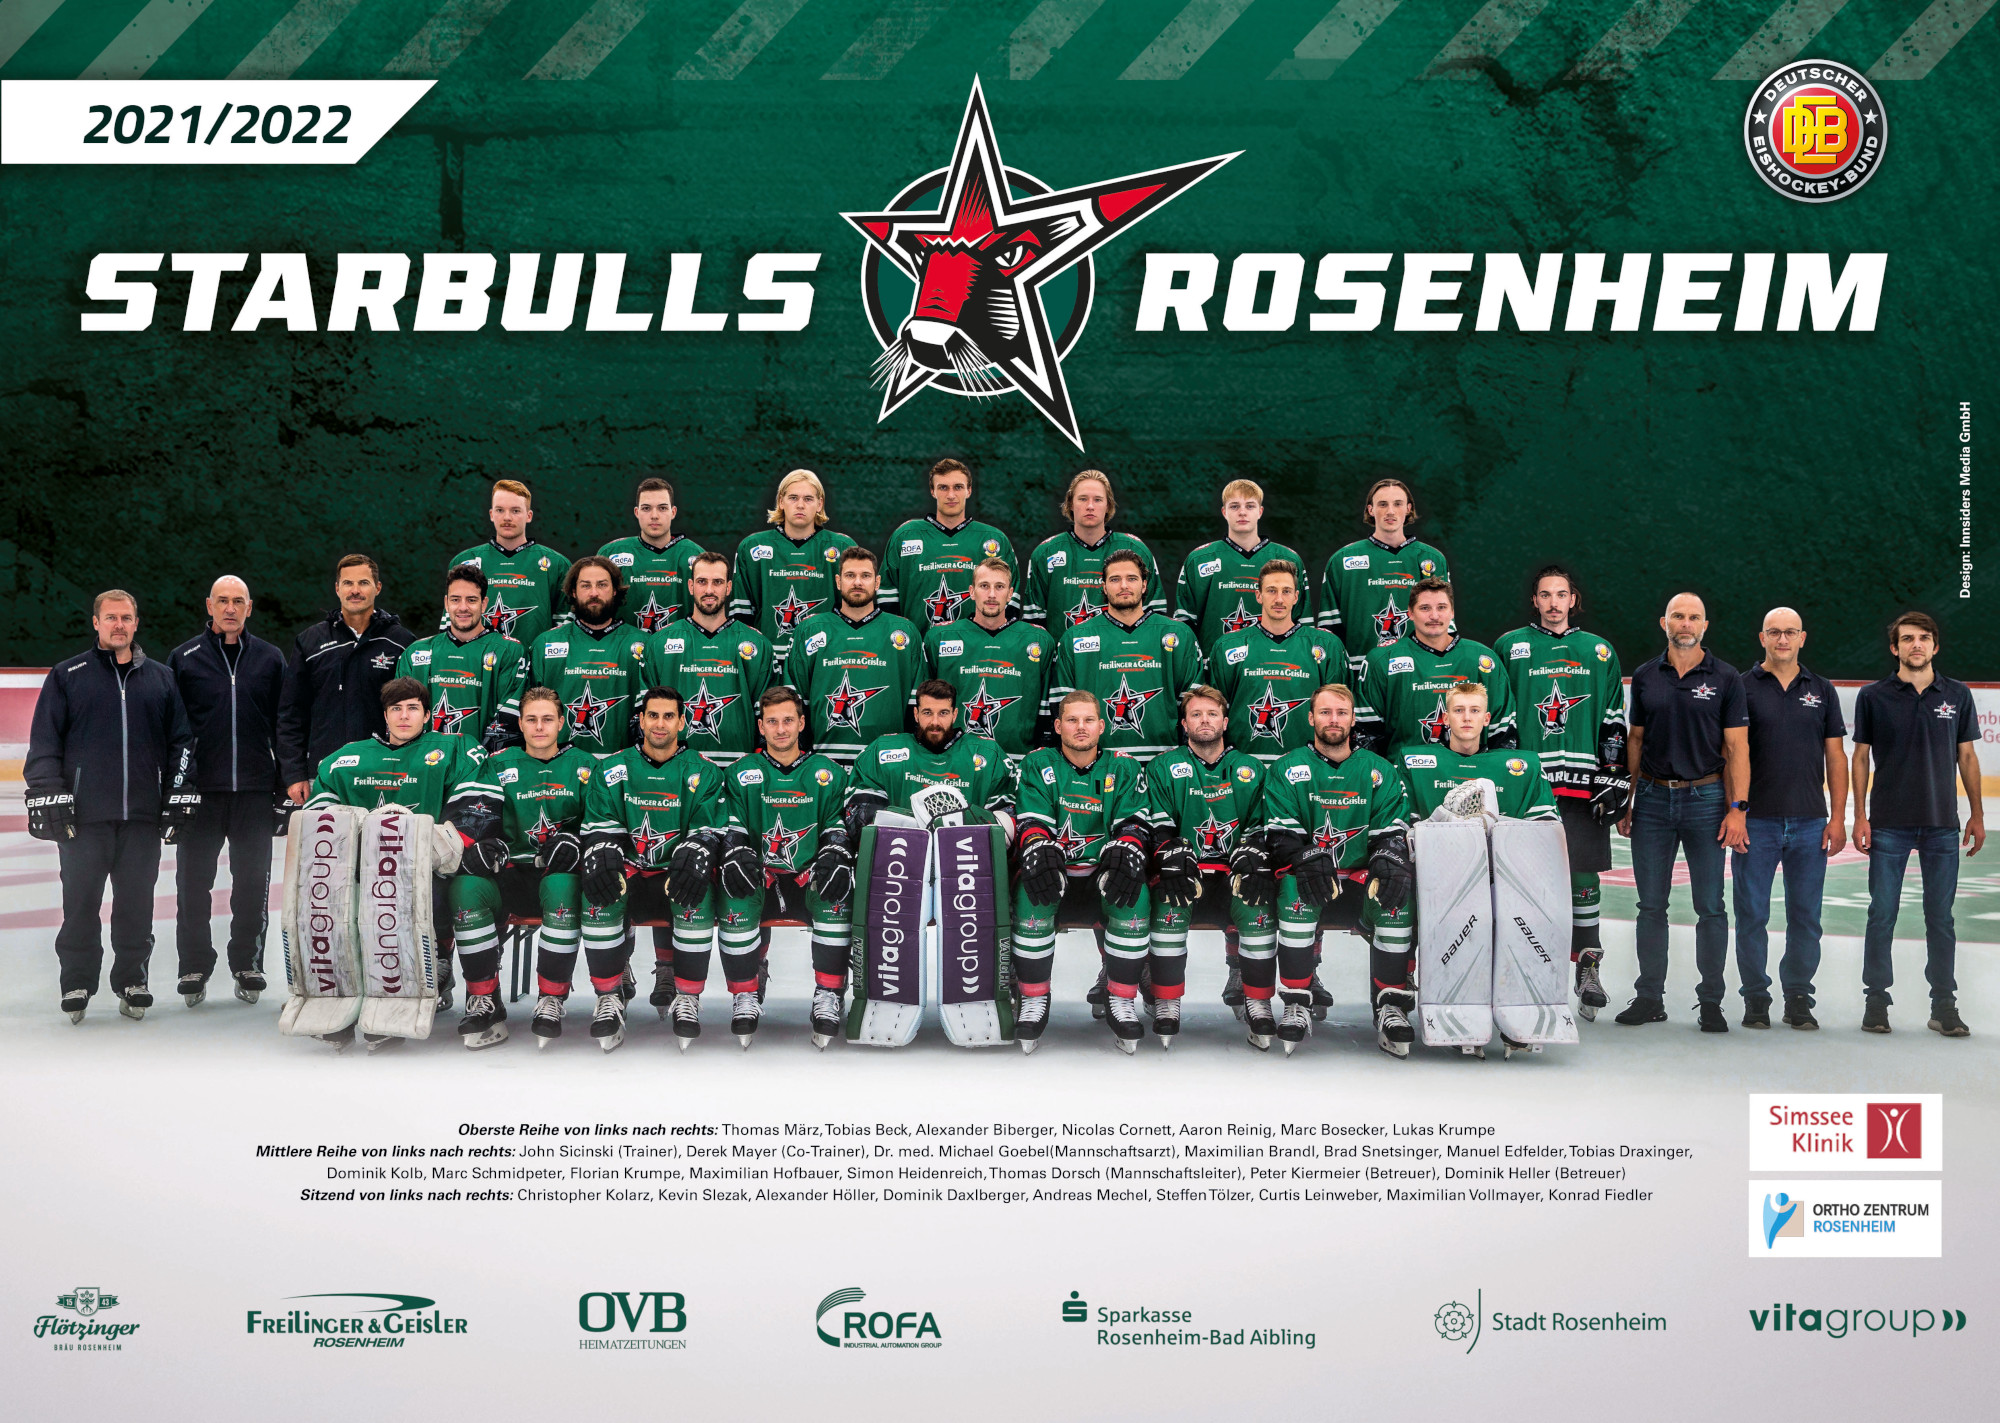 Mannschaftsposter der Starbulls Rosenheim, Saison 2021/2022